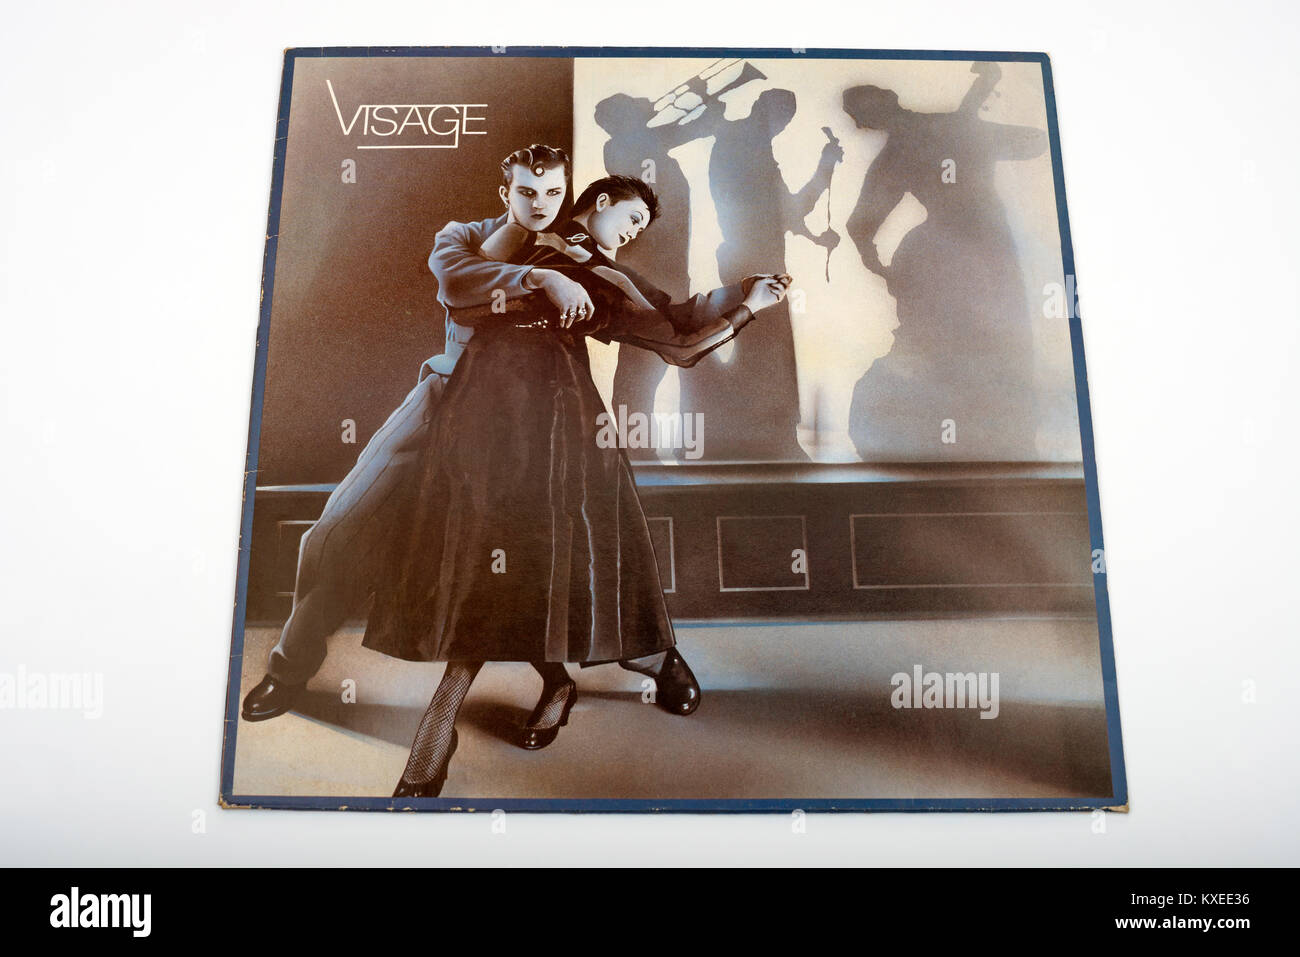 Visage vinyl record sleeve Stock Photo